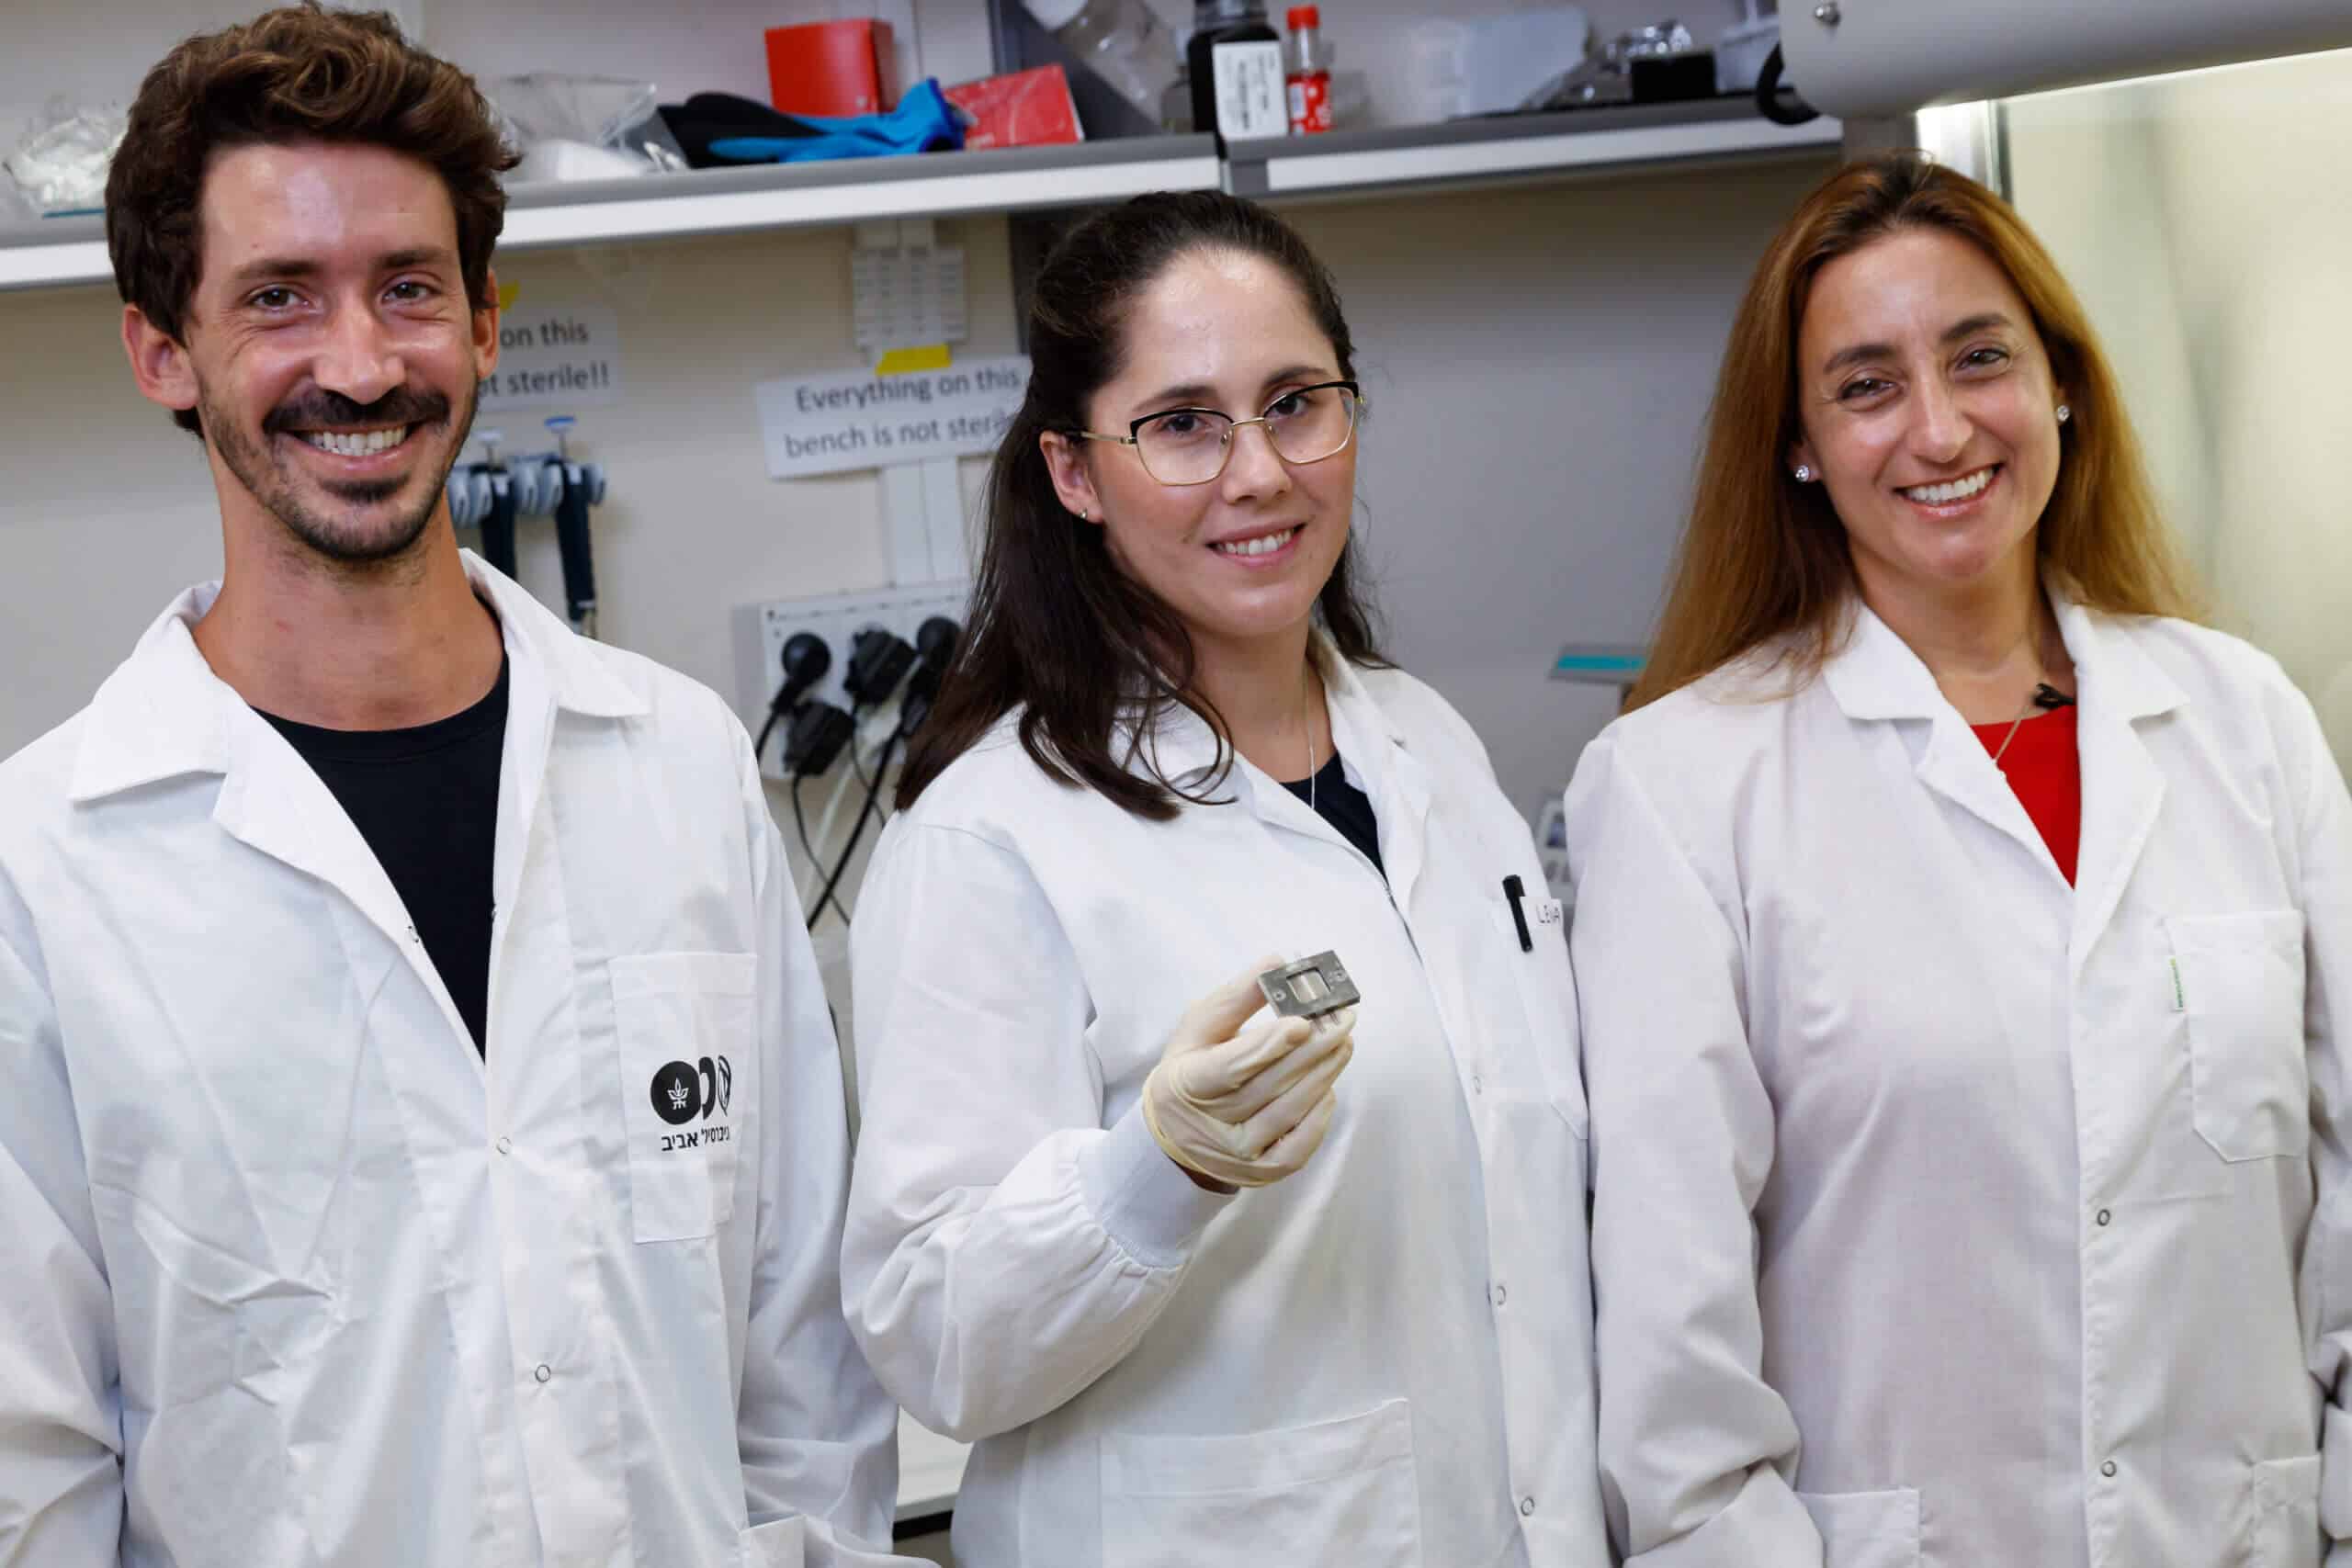 The research team (from right to left): Ronit Sachi Fainero, Lena Neufeld, Elam Eini. Photo: Tel Aviv University spokesperson